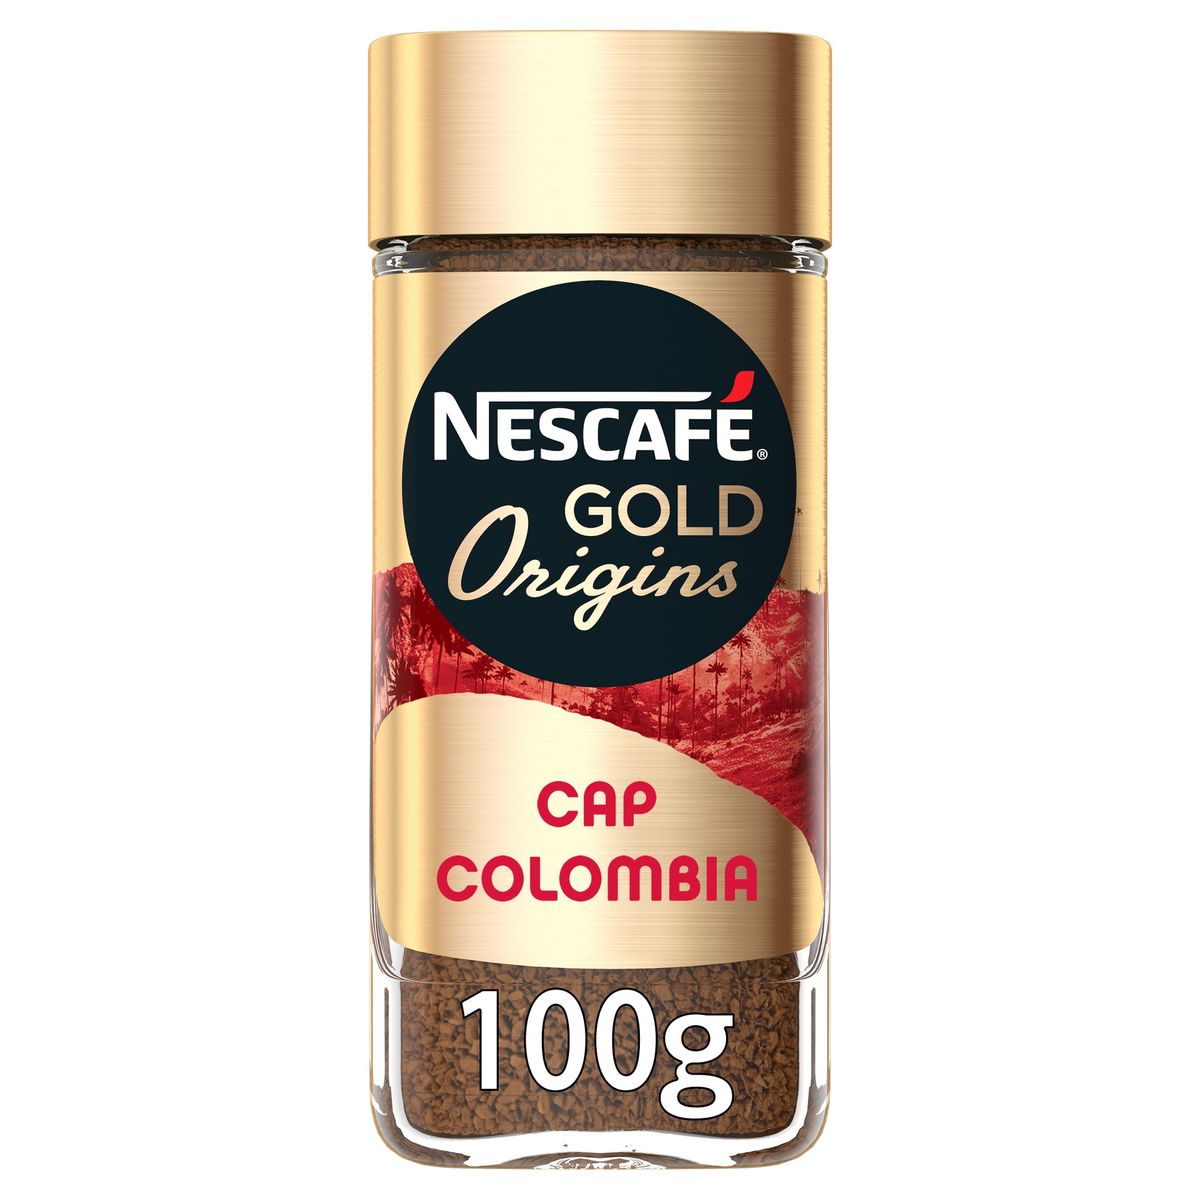 Nescafé Gold Café Columbia 100g